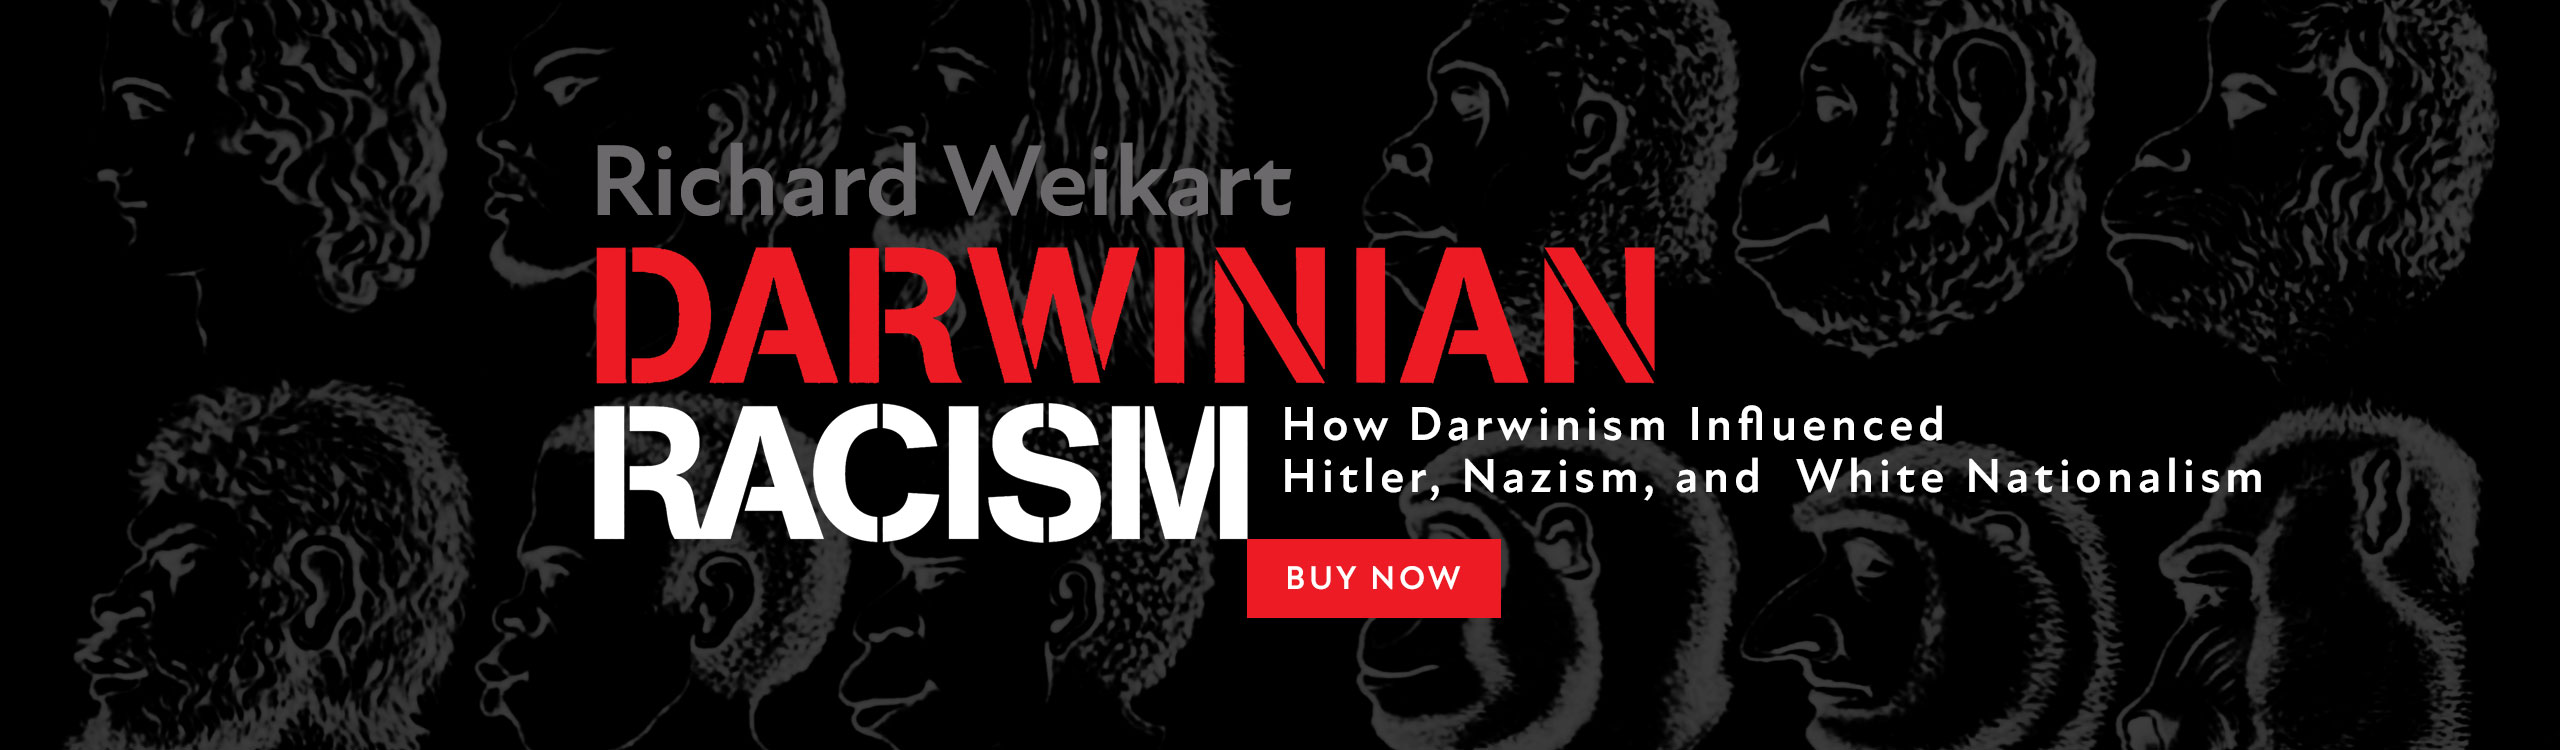 Darwinian Racism by Richard Weikart